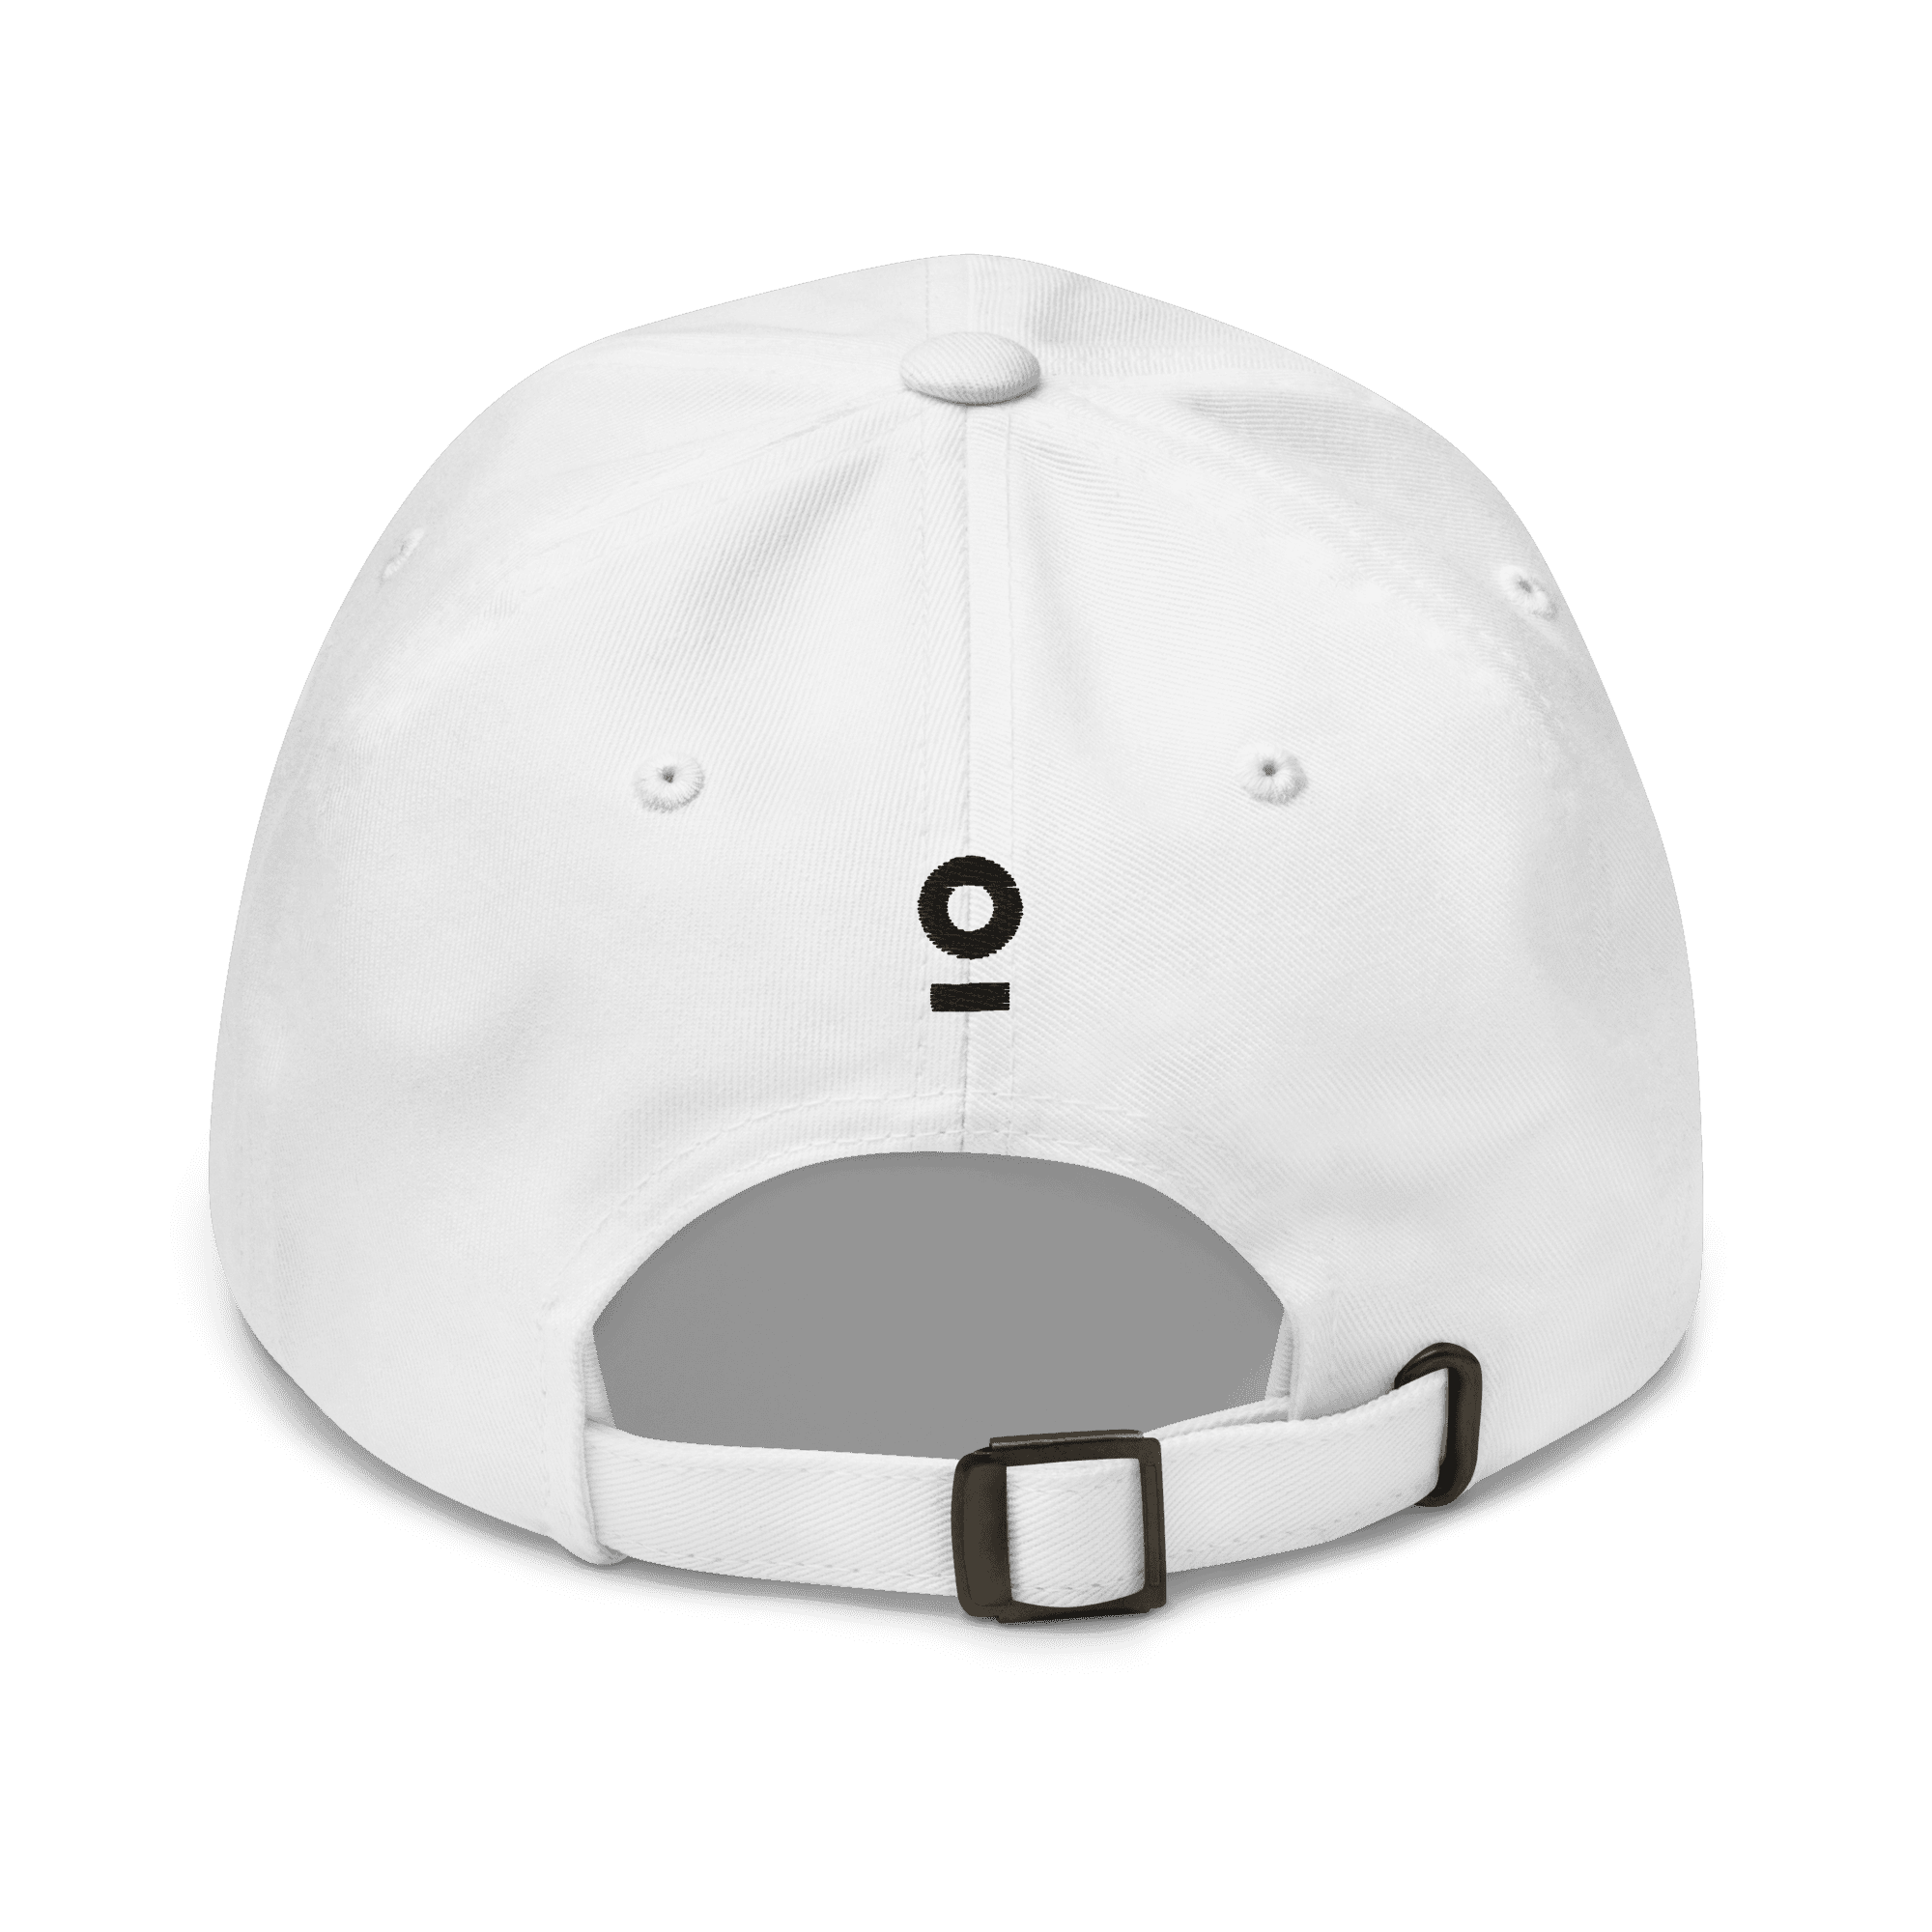 Boxhill's Minimalist White Hat solo photo back view